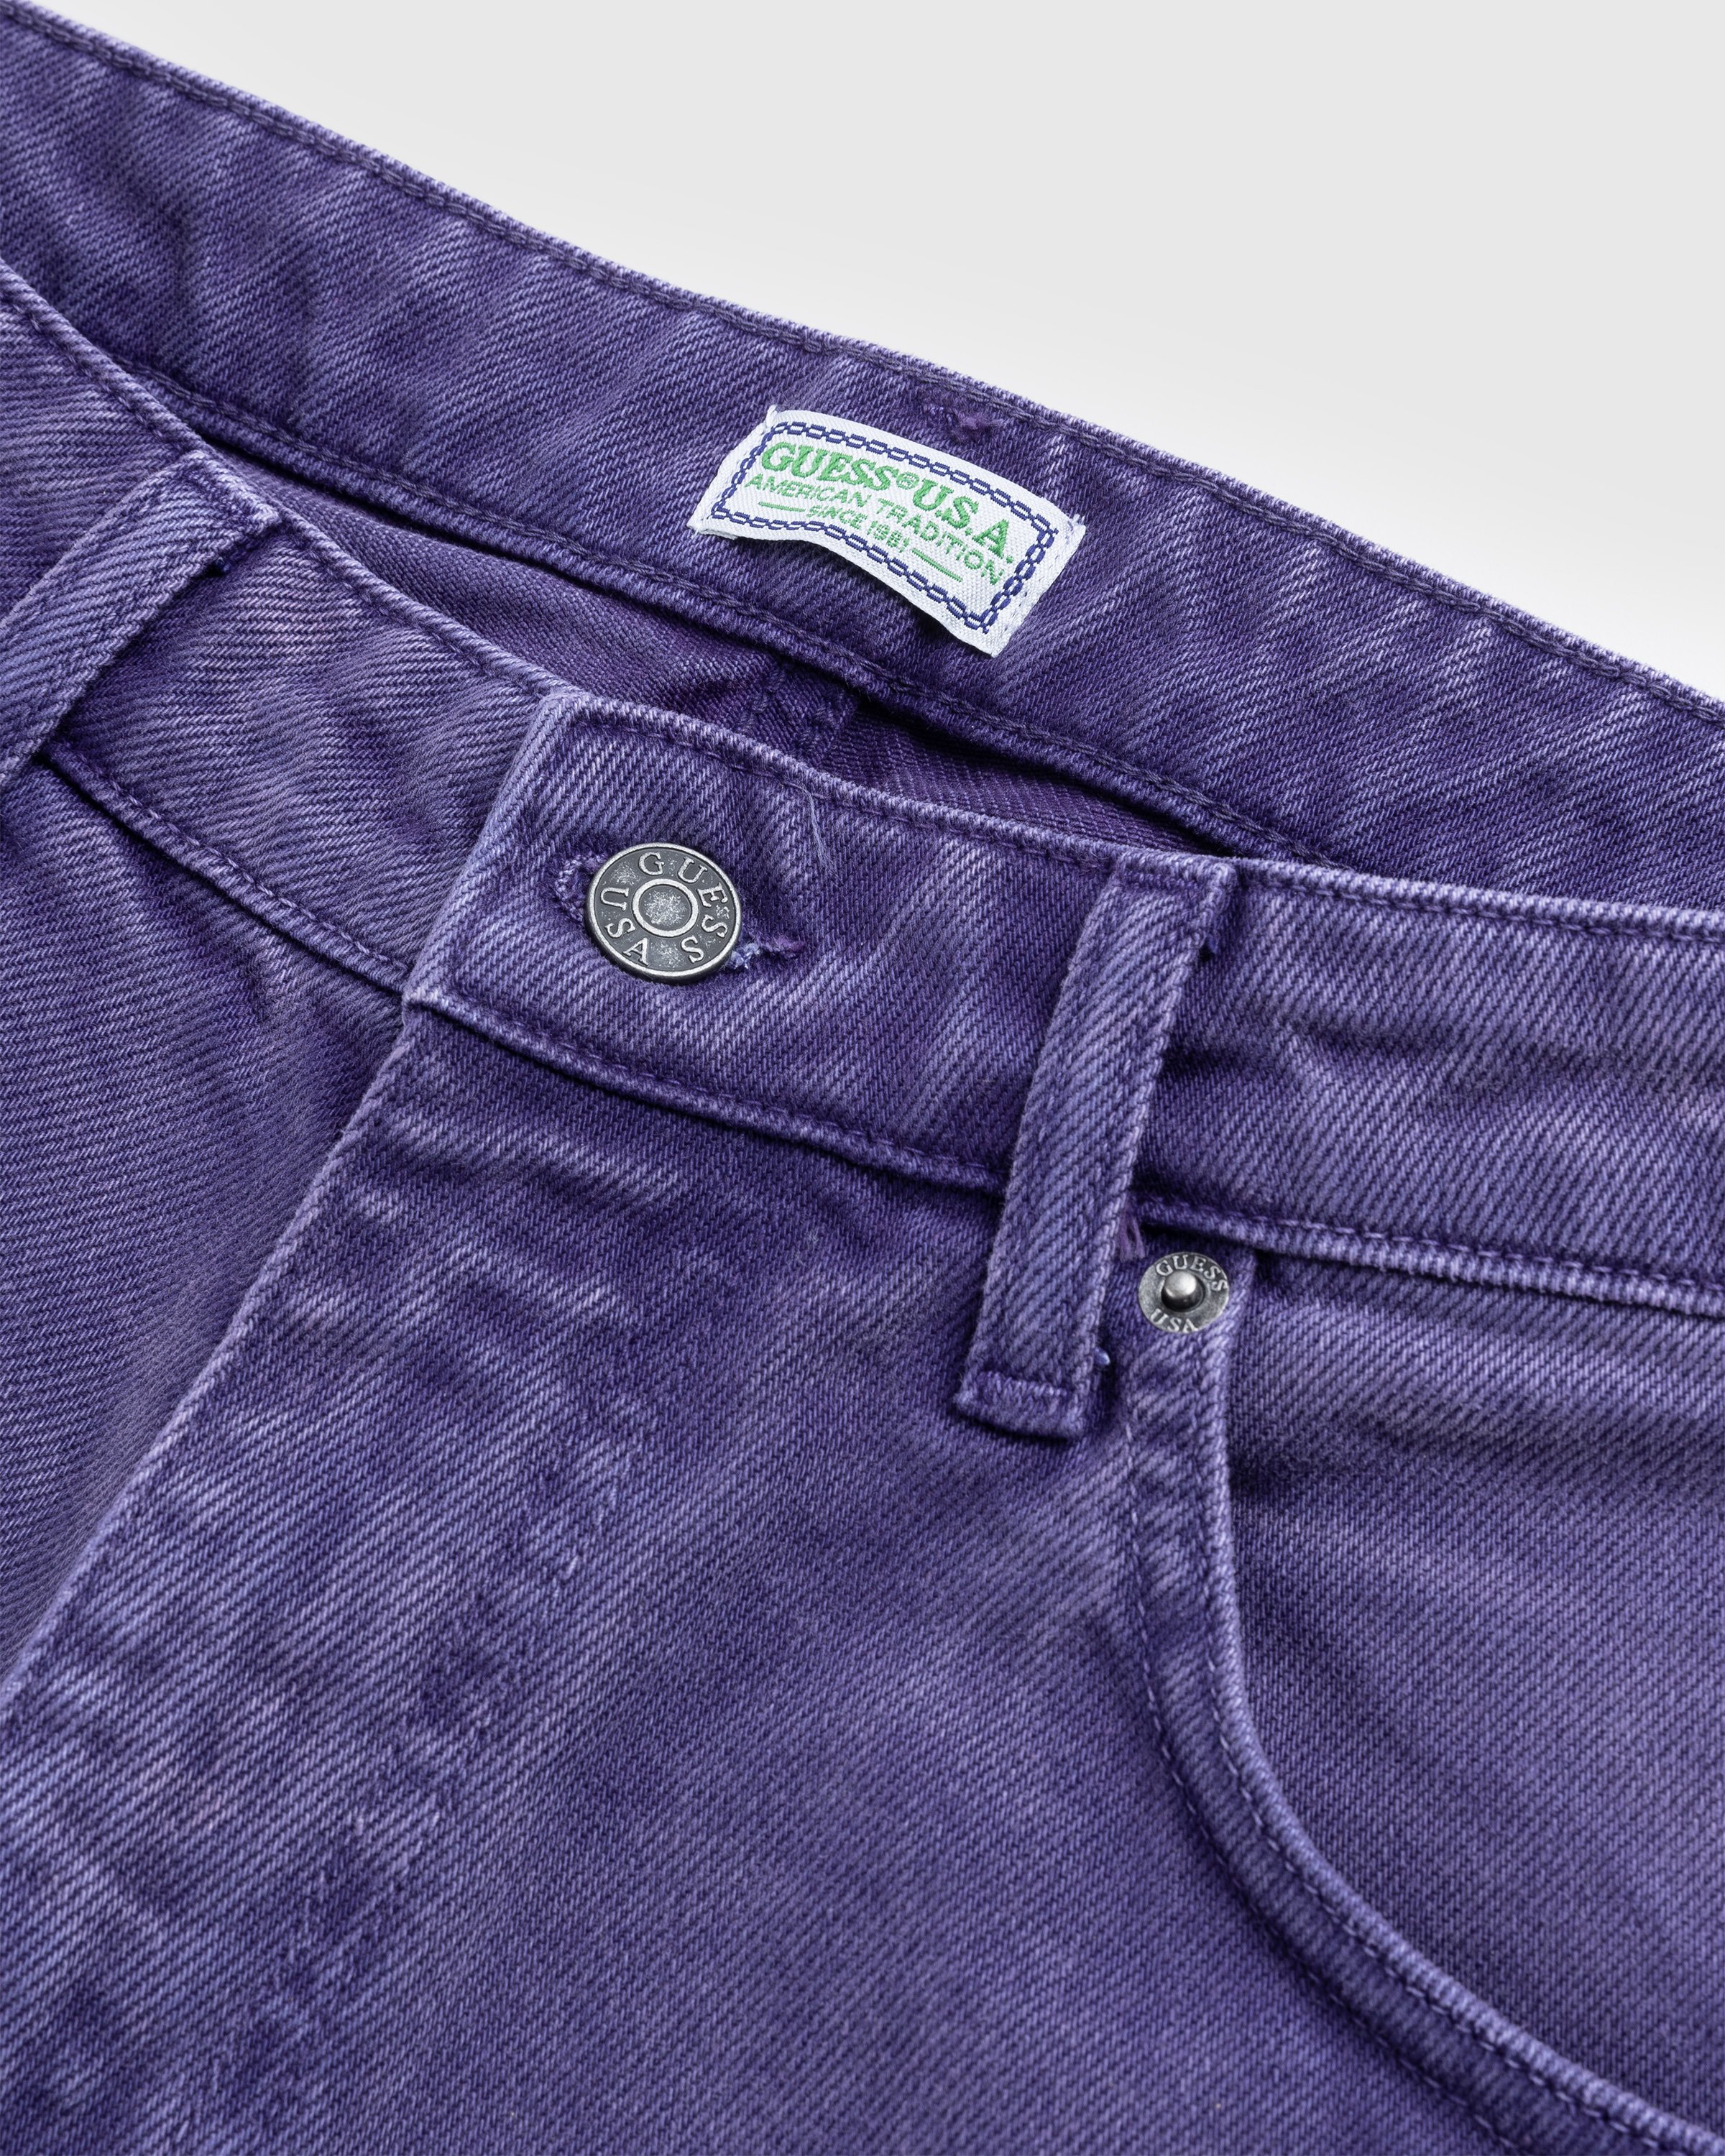 Guess USA - Vintage Denim Short Purple - Clothing - Purple - Image 5